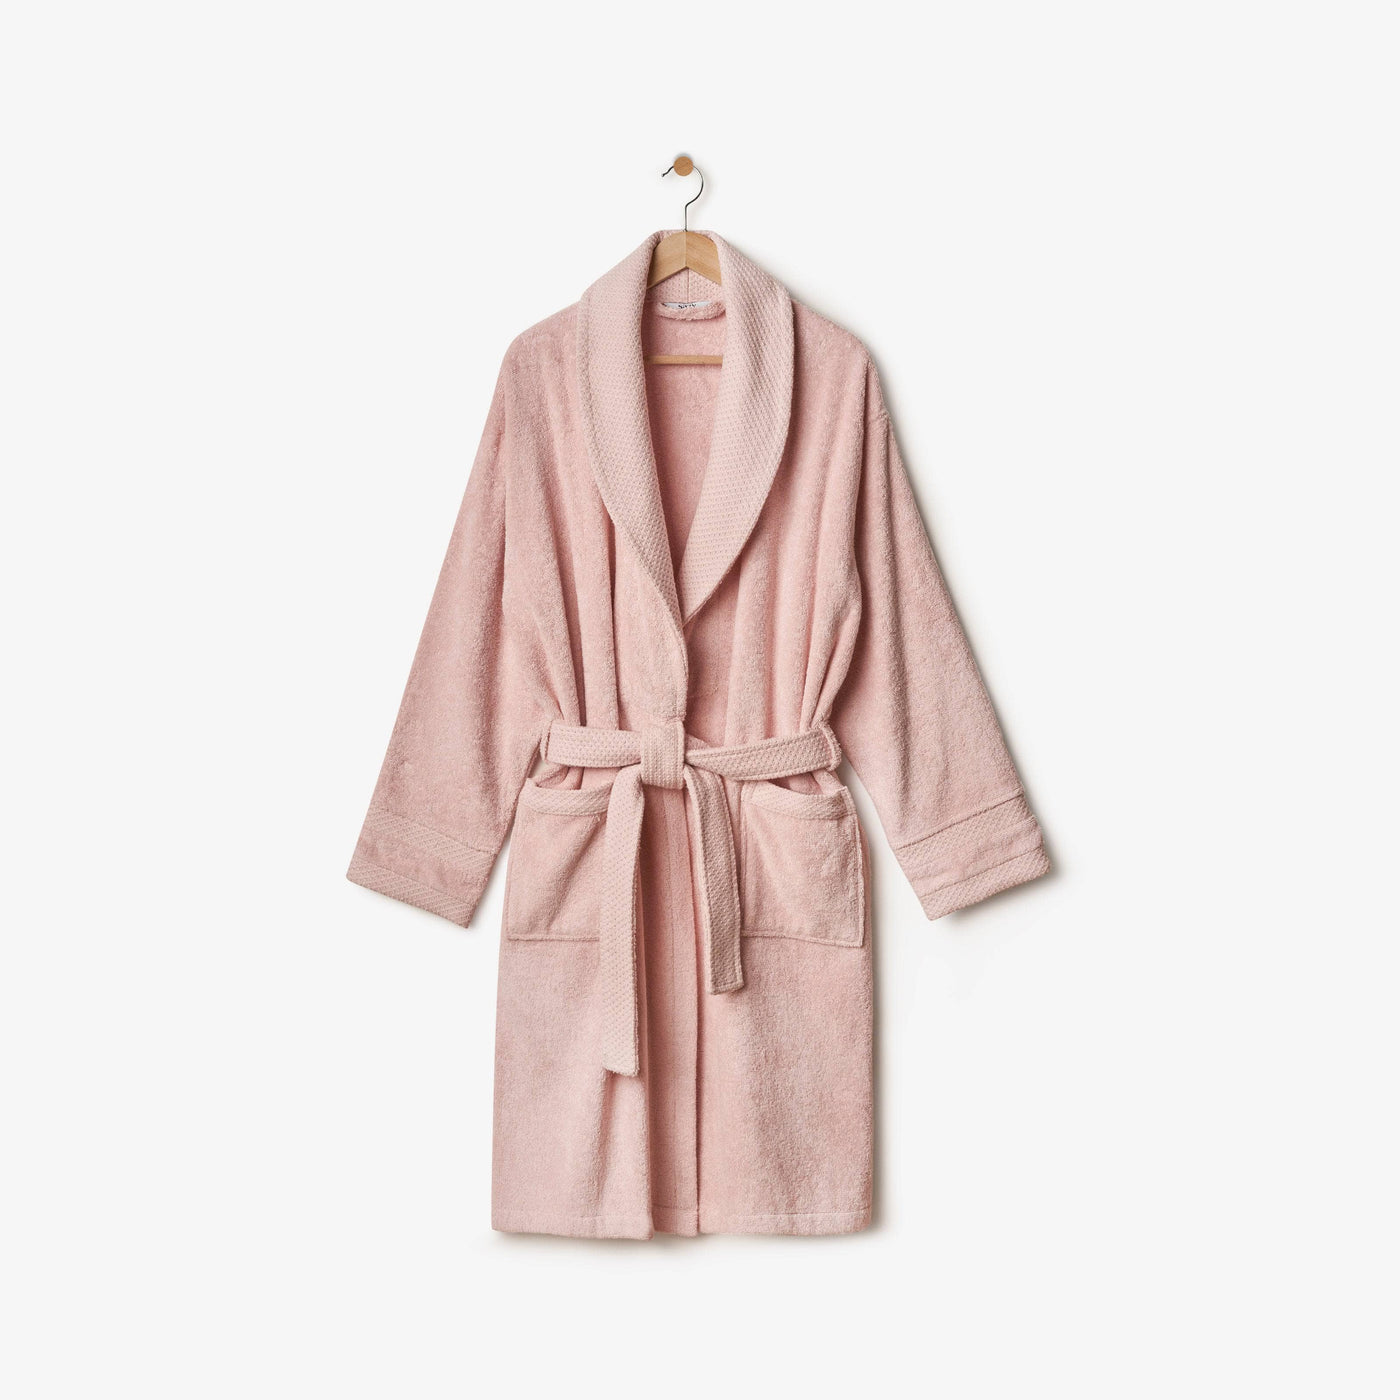 Rosalie Aqua Fibro Extra Soft 100% Turkish Cotton Women's Dressing Gown, Pink, S Dressing Gowns sazy.com